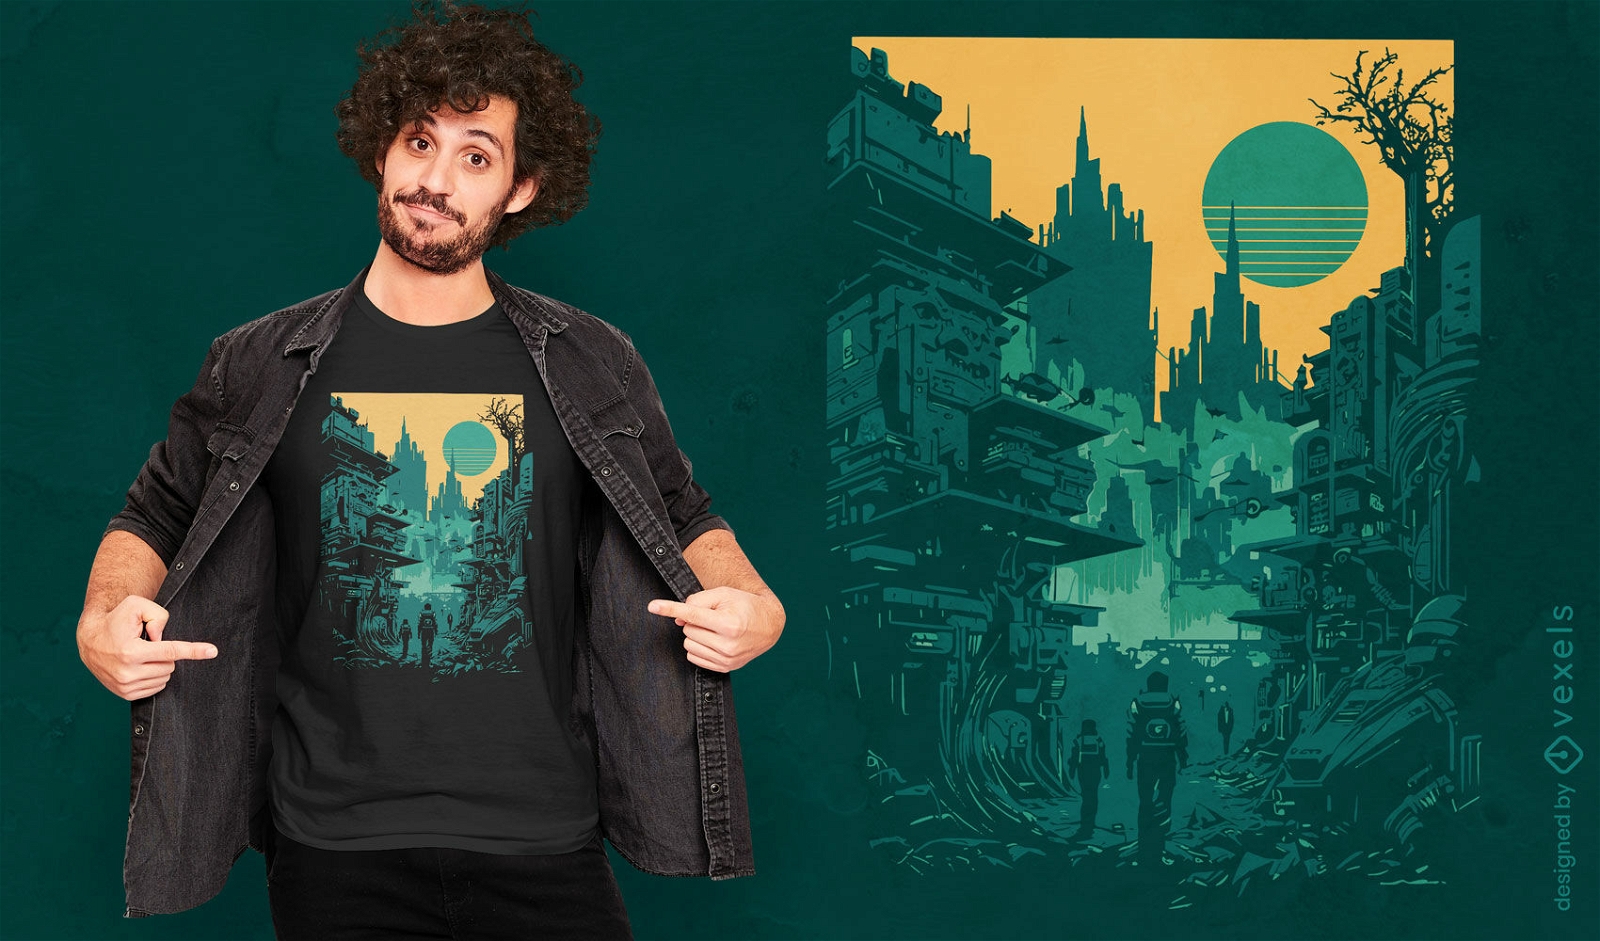 Futuristic city t-shirt design 